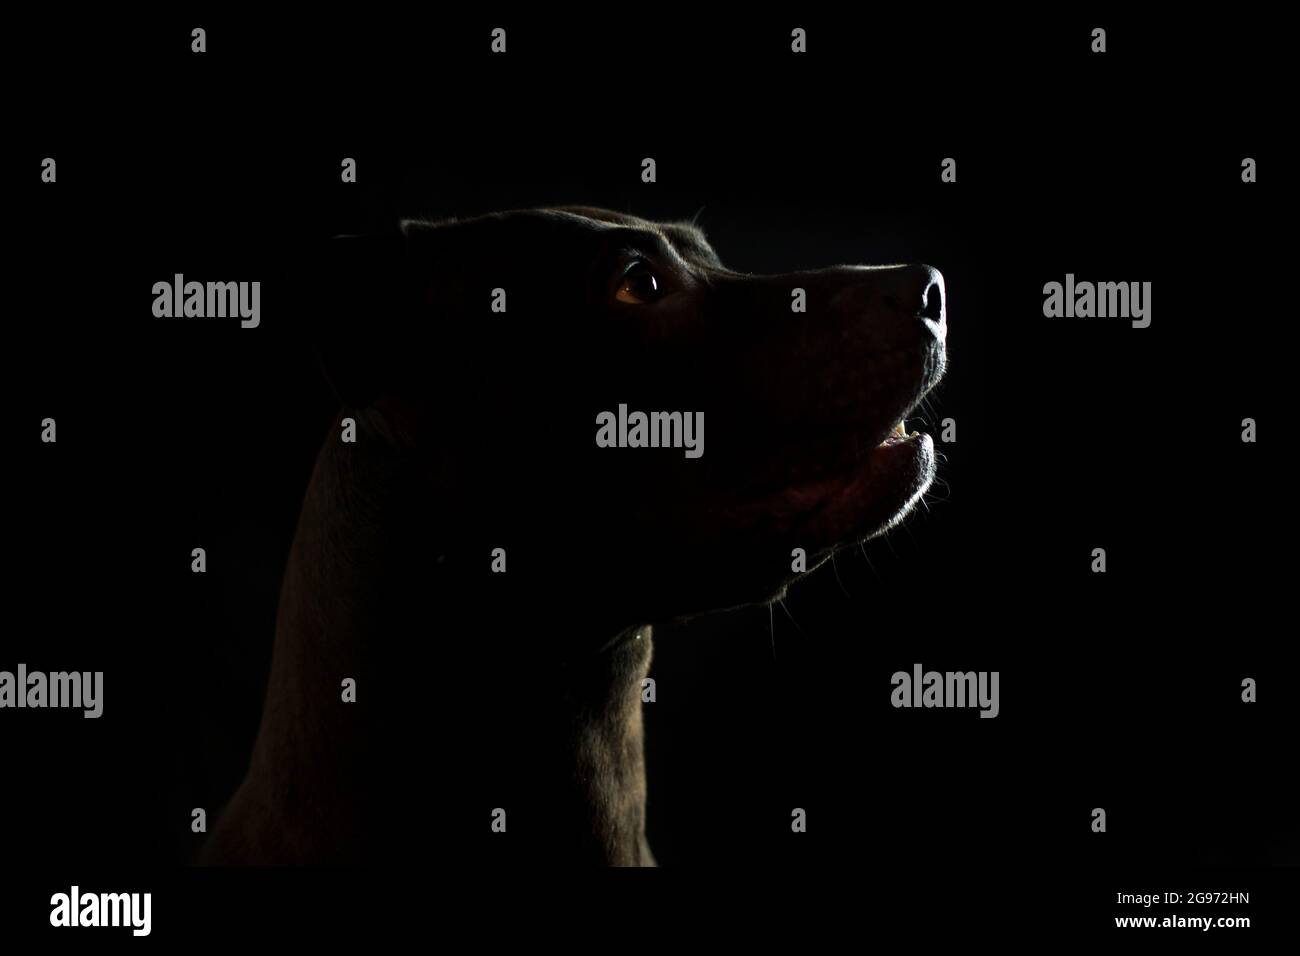 Black American Pit Bull Terrier, studio photograph, black background Stock Photo